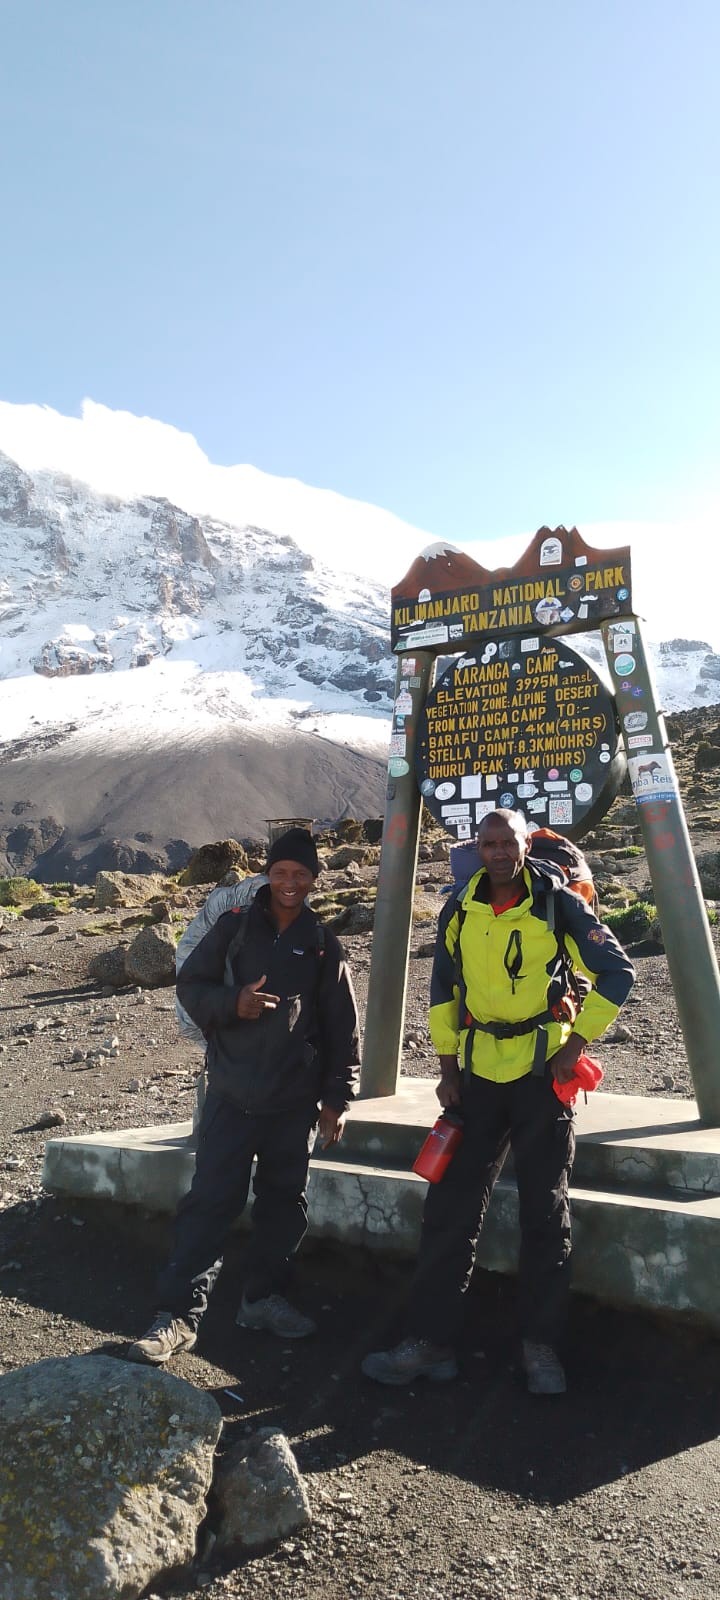 Climbing mount kilimanjaro trekking hiking active adventures epic tours safaris yha kenya travel mountain adventures tanzania tours 12 1